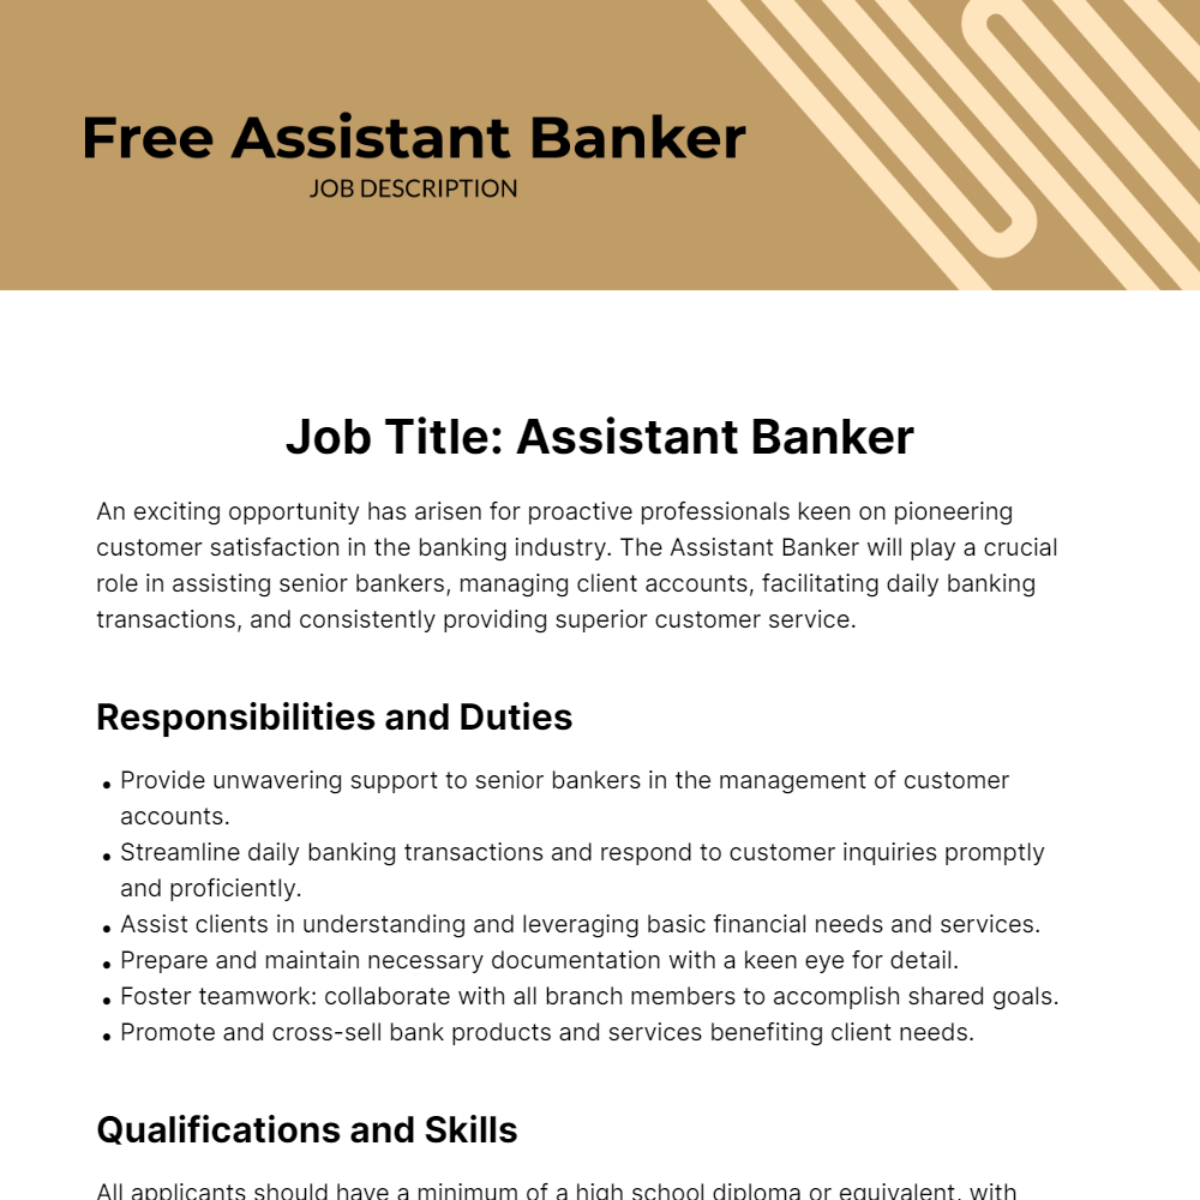 Free Assistant Banker Job Description Template